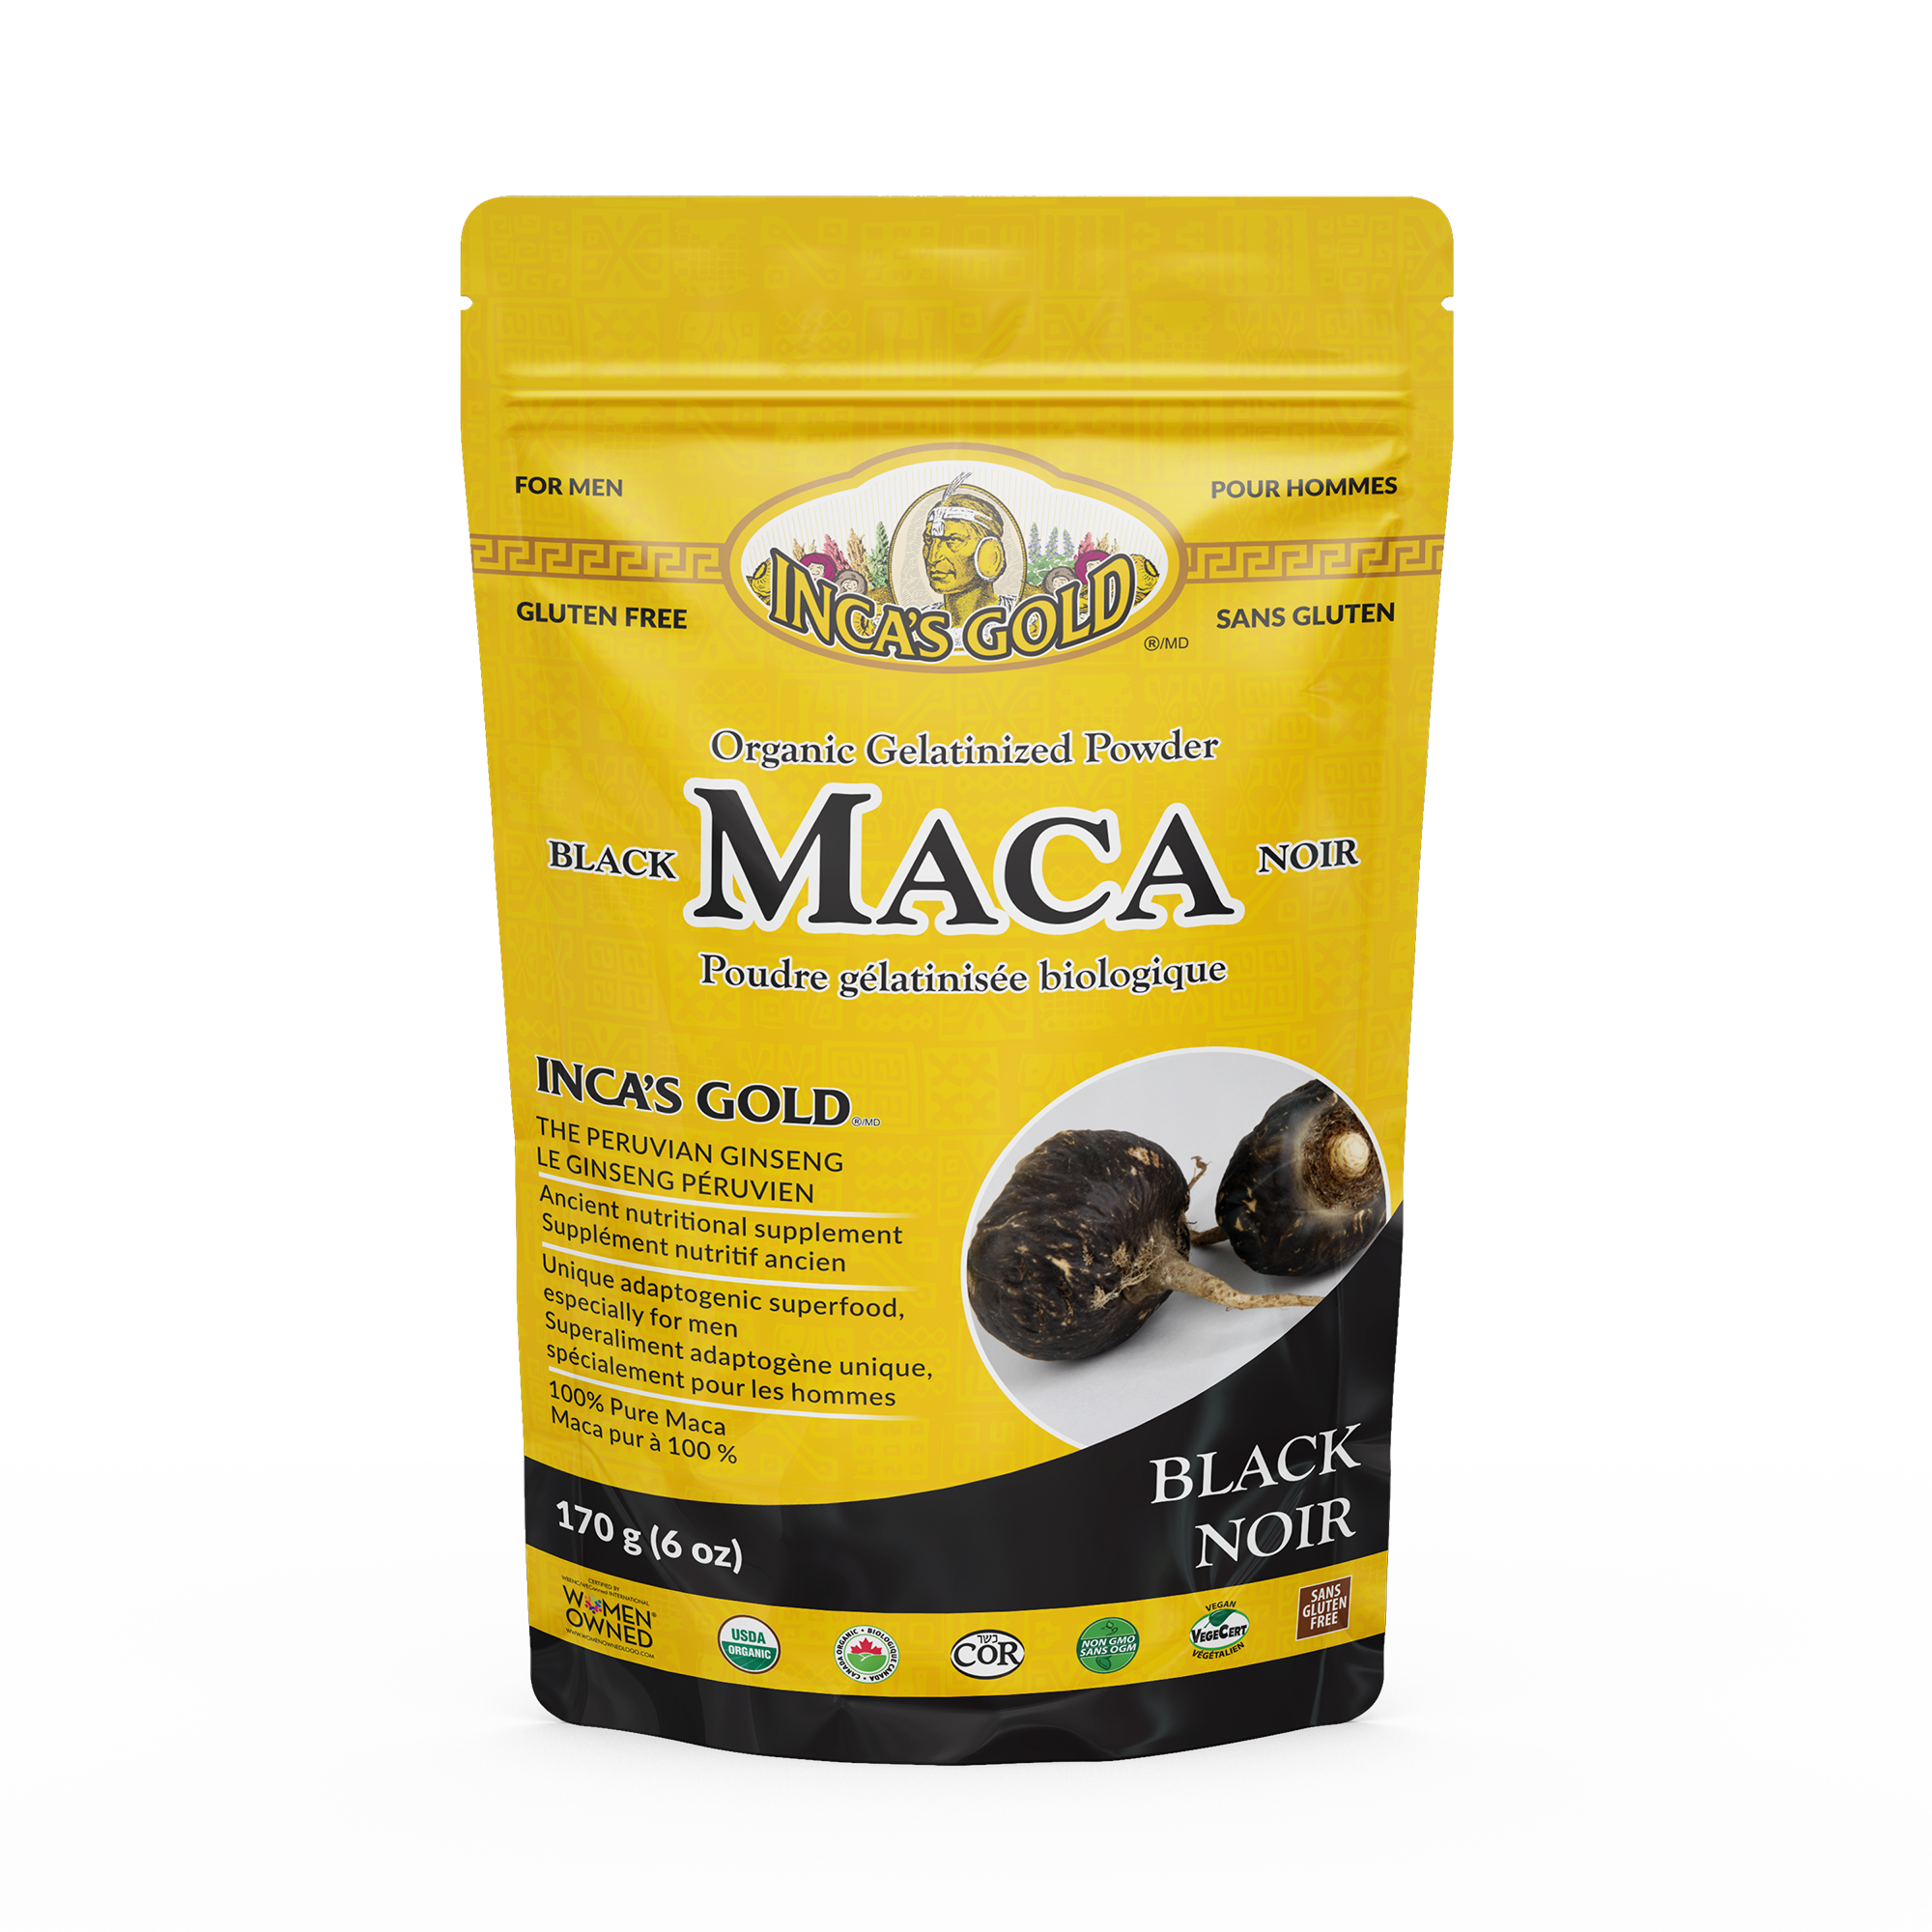 Black-MACA-Organic-Powder-INCA'S GOLD Superfood